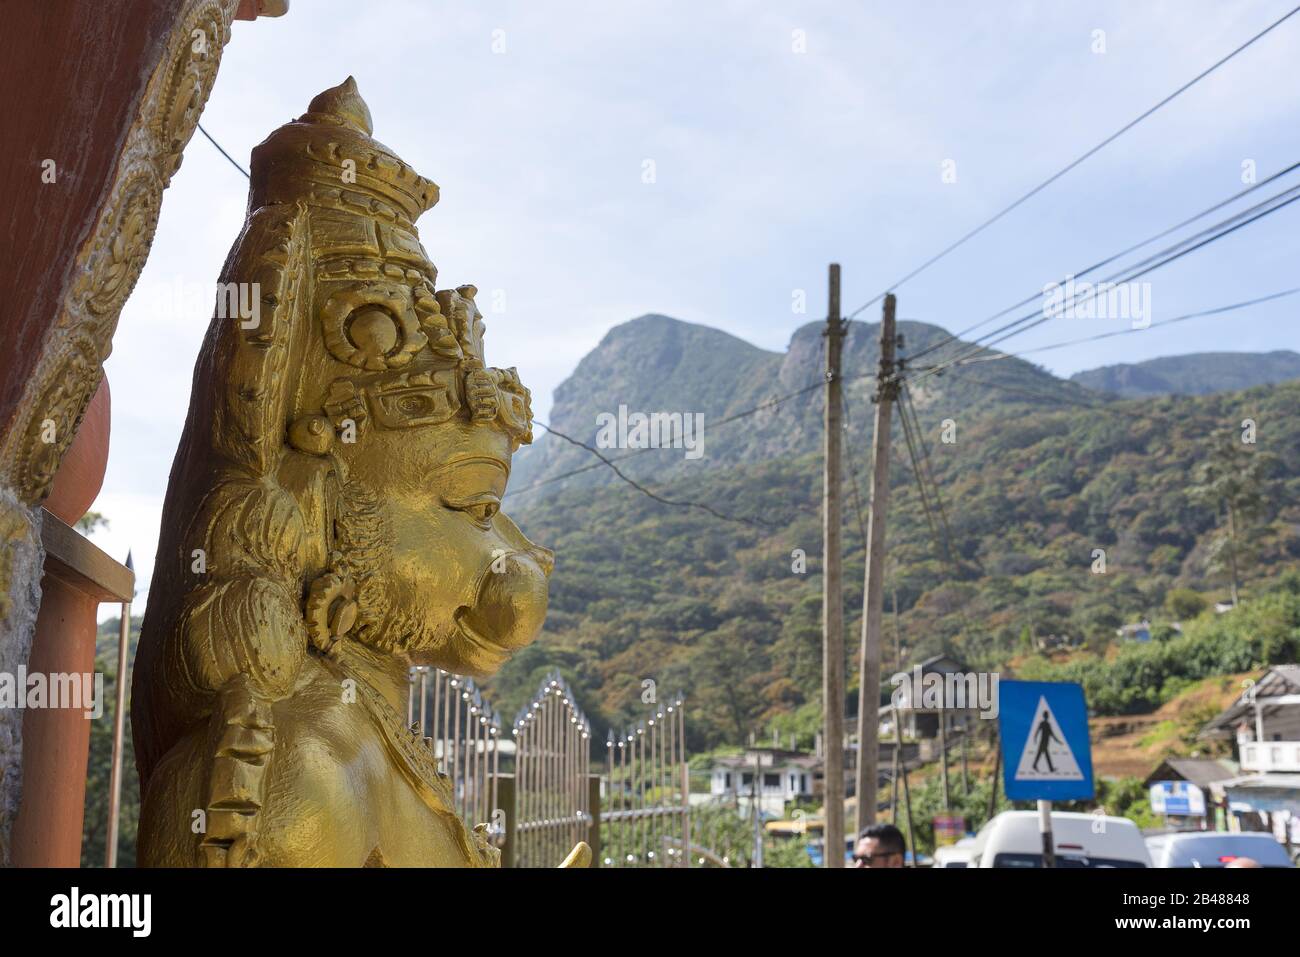 Nuwara Eliya, Sri Lanka: 03/21/2019:Sriramajayam Hindu Temple ornate gold statues of the gods. Stock Photo